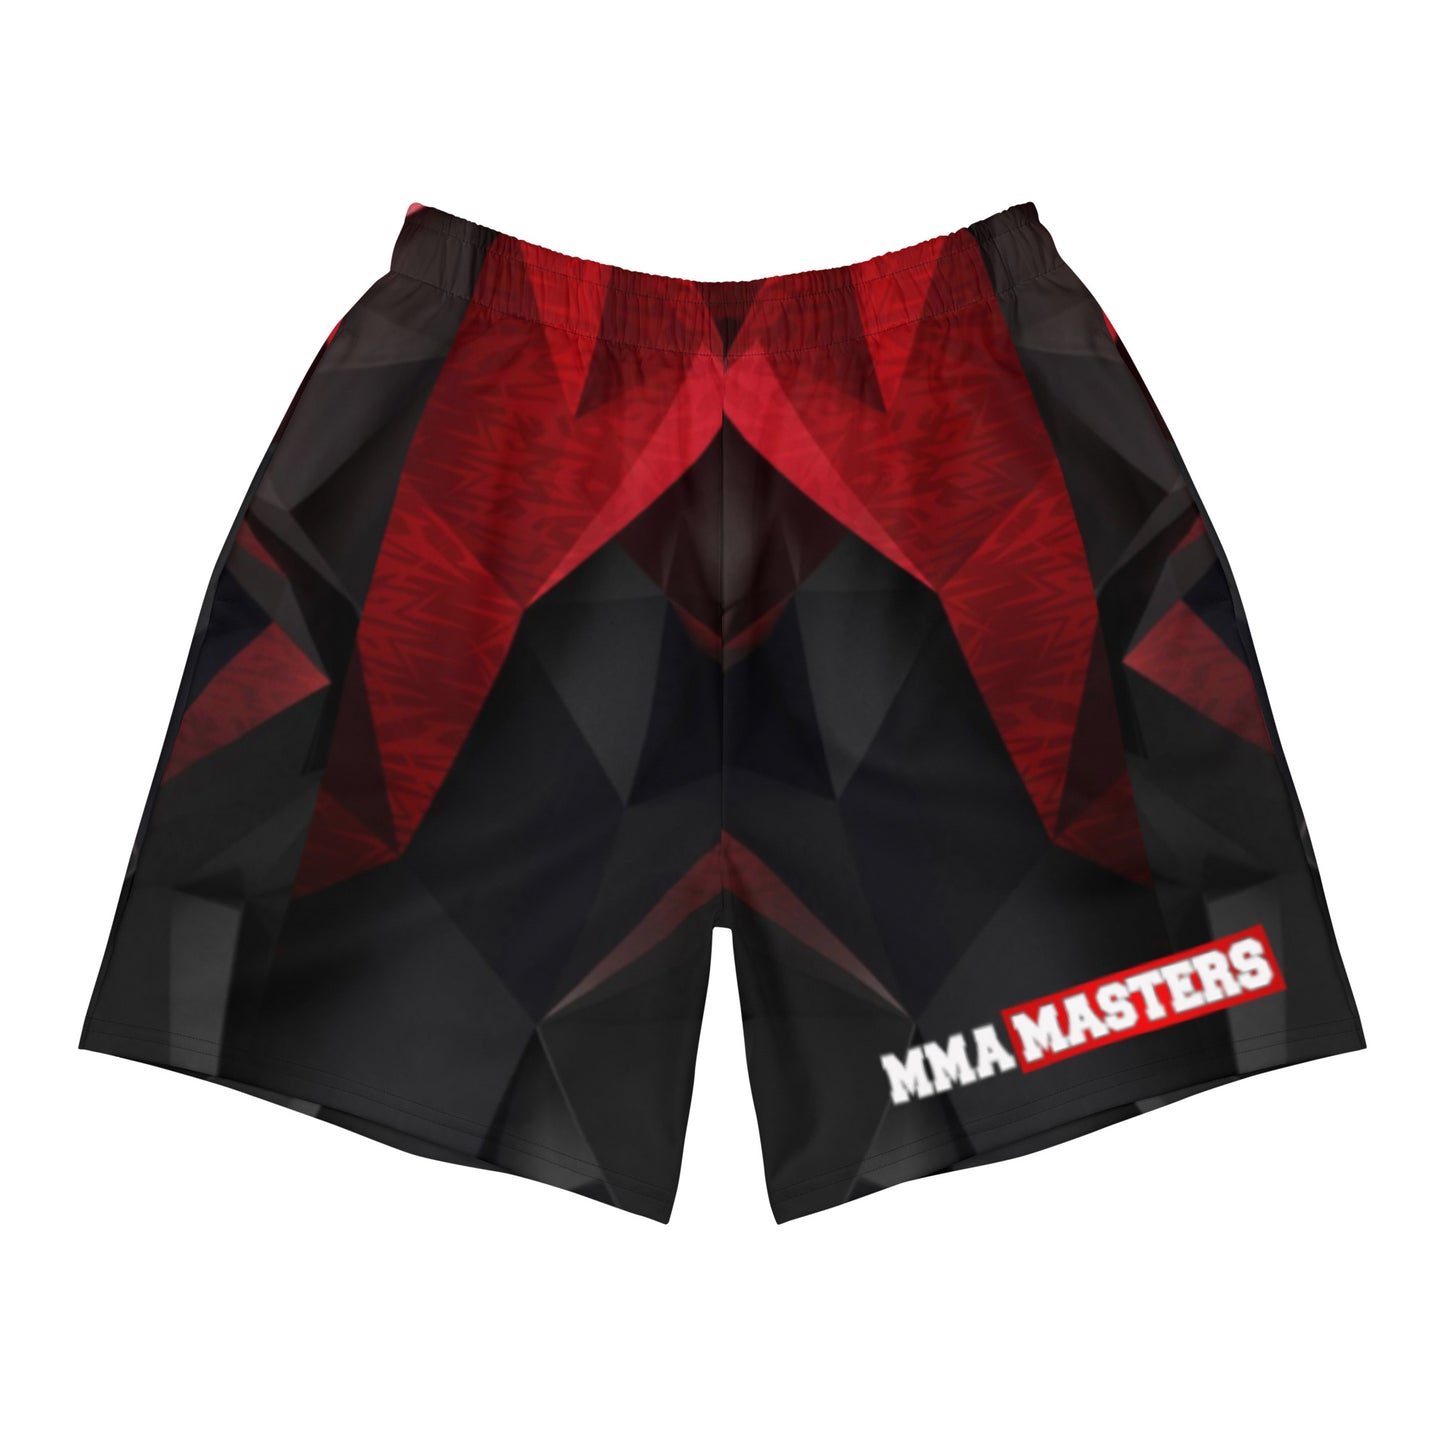 MMA MASTERS Men's Athletic Long Shorts